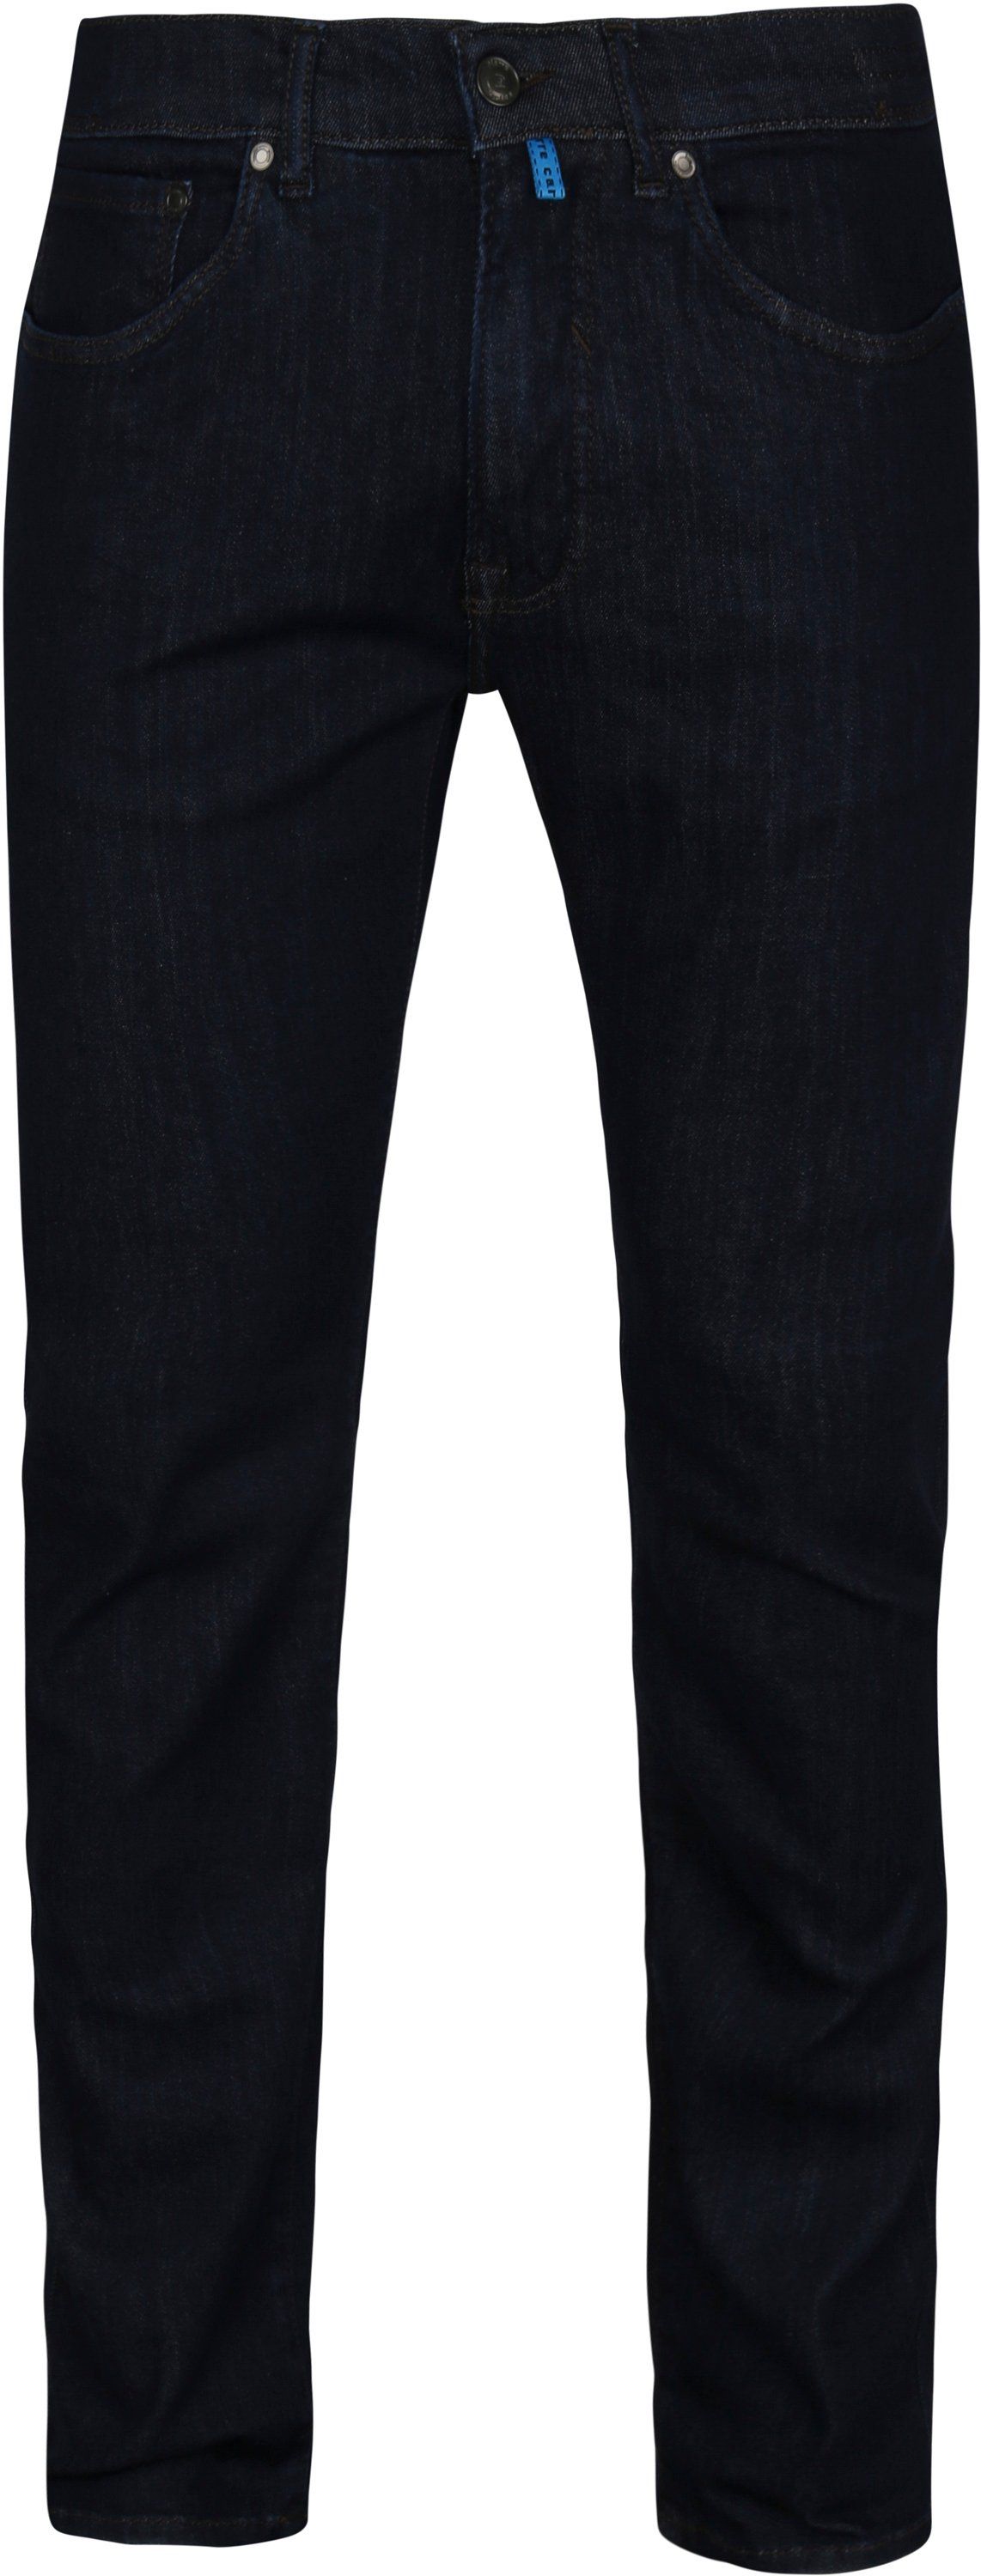 Pierre Cardin 5 Pocket Jeans Antibes Dark Blue Dark Blue size W 31